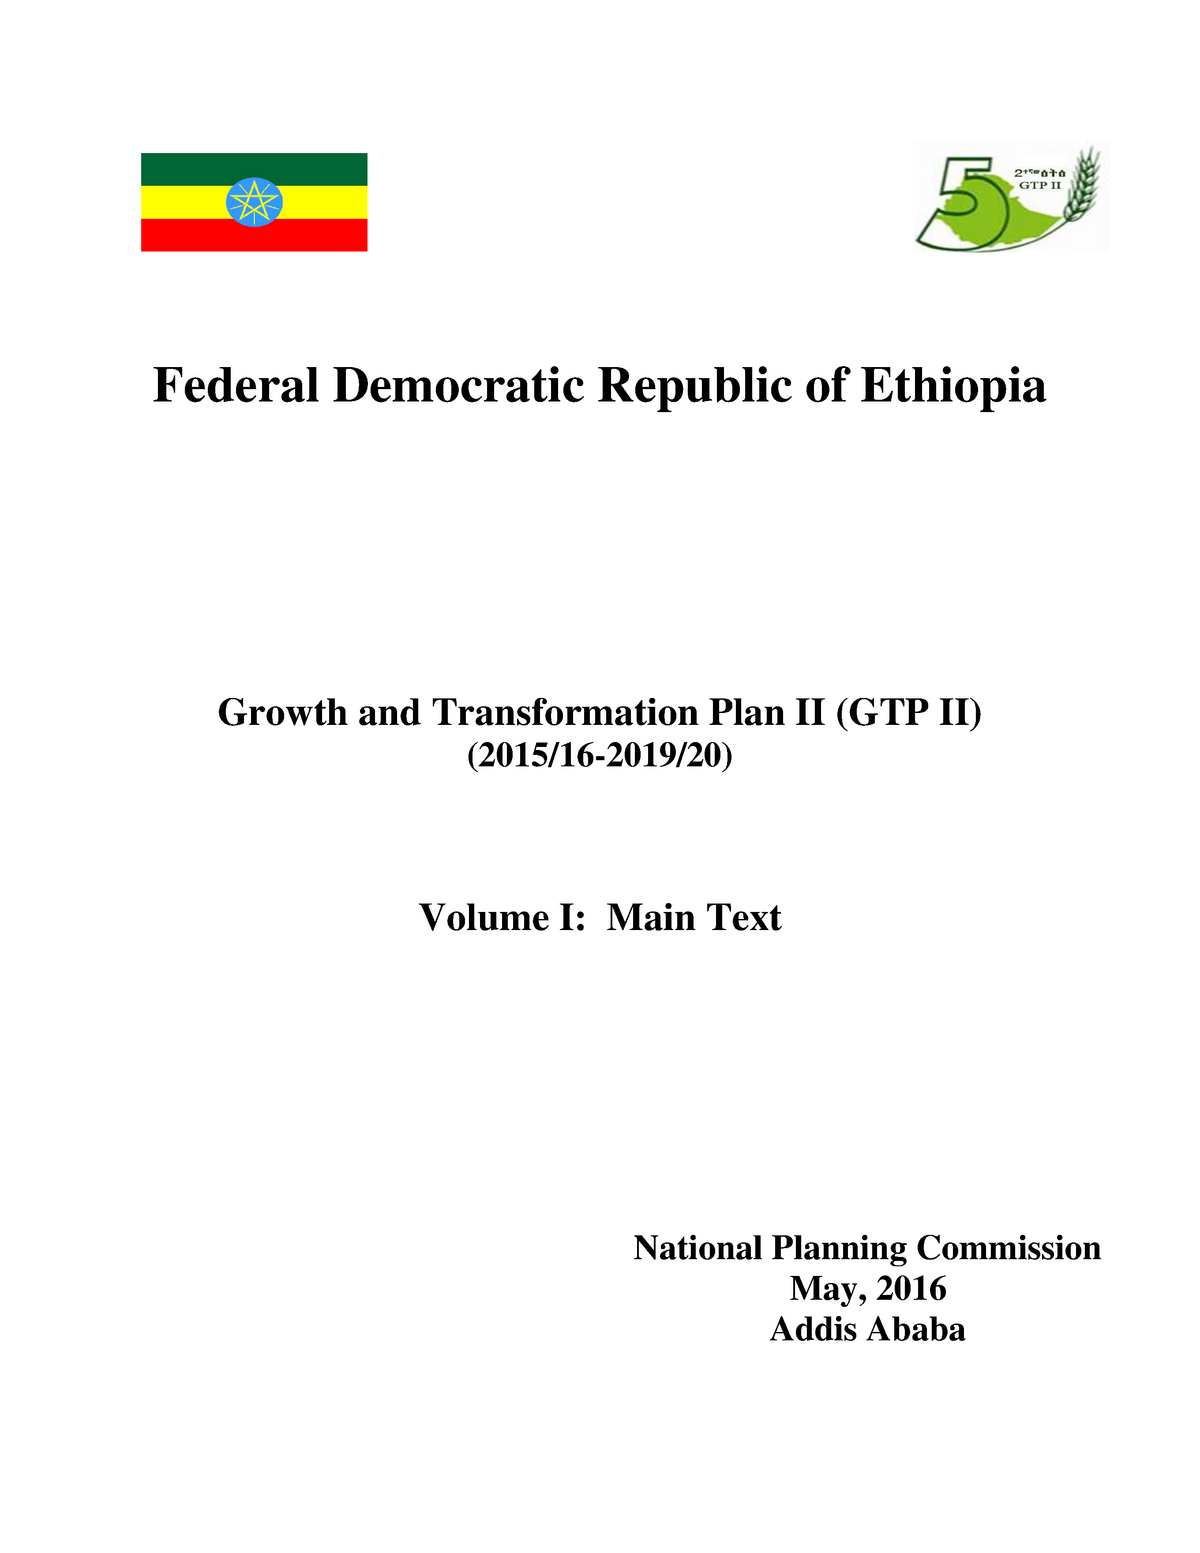 best ethiopian business plan